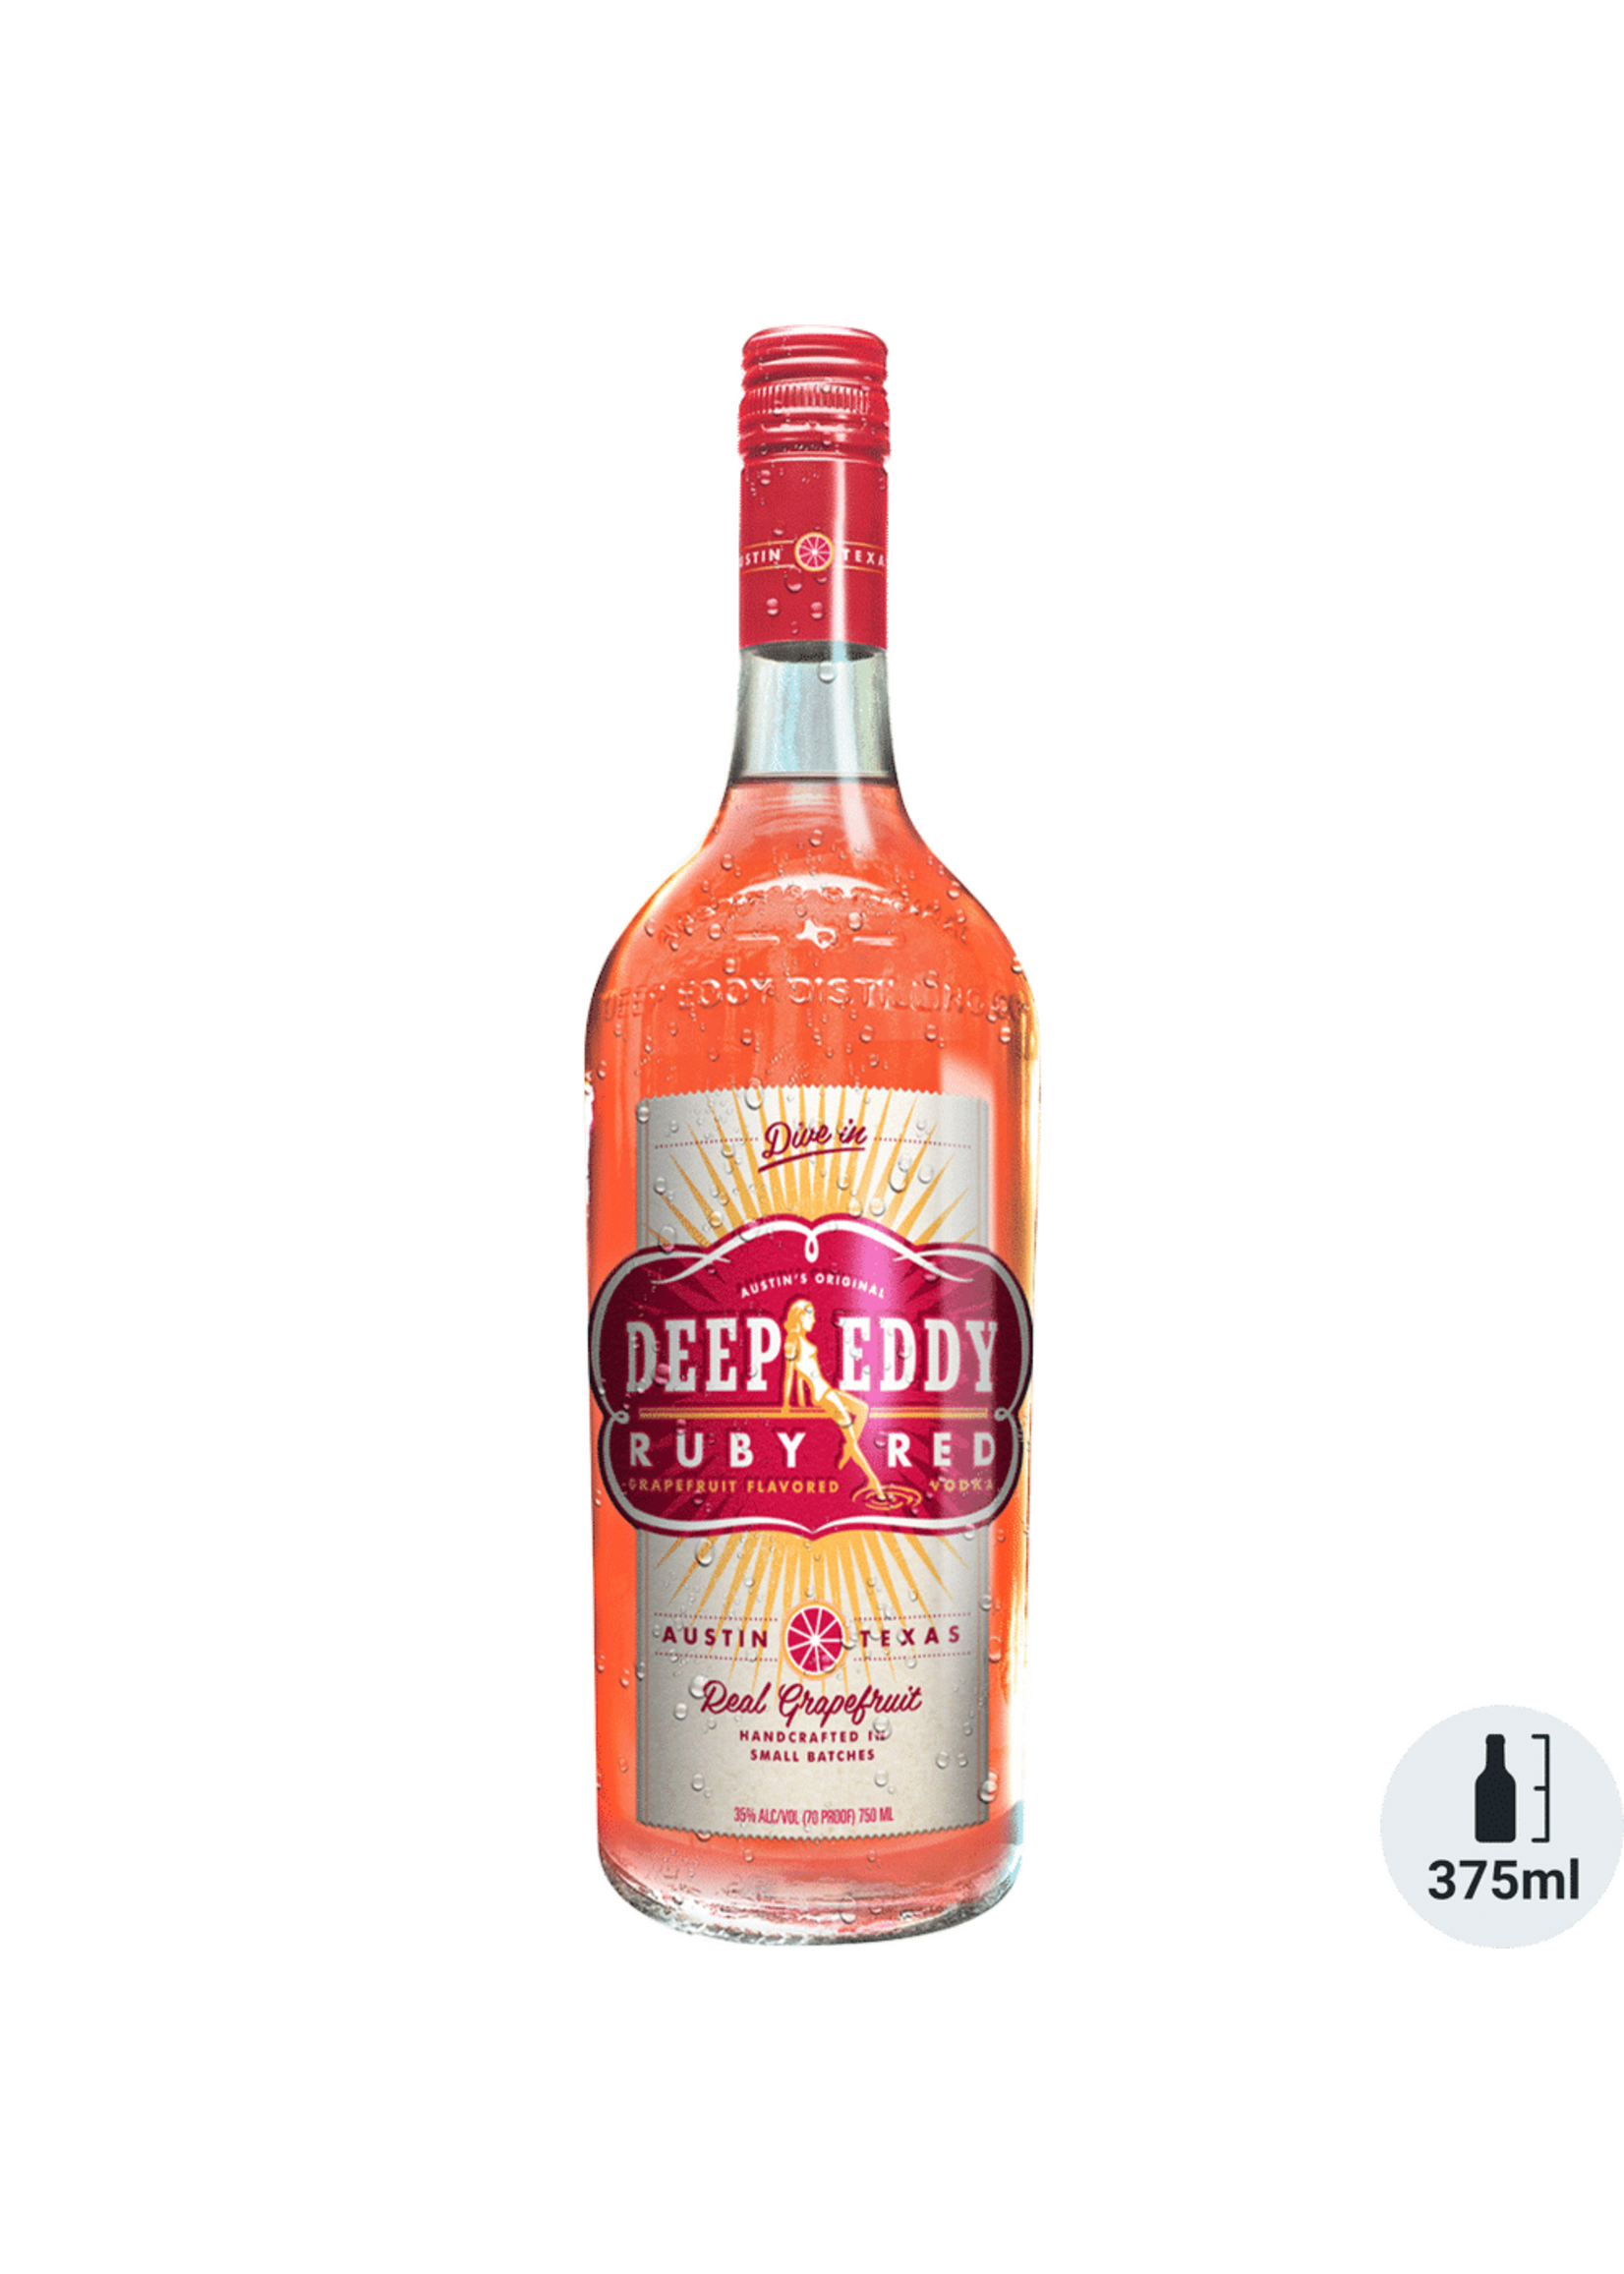 Deep Eddy Texas Ruby Red Grapefruit Vodka 70Proof 375ml